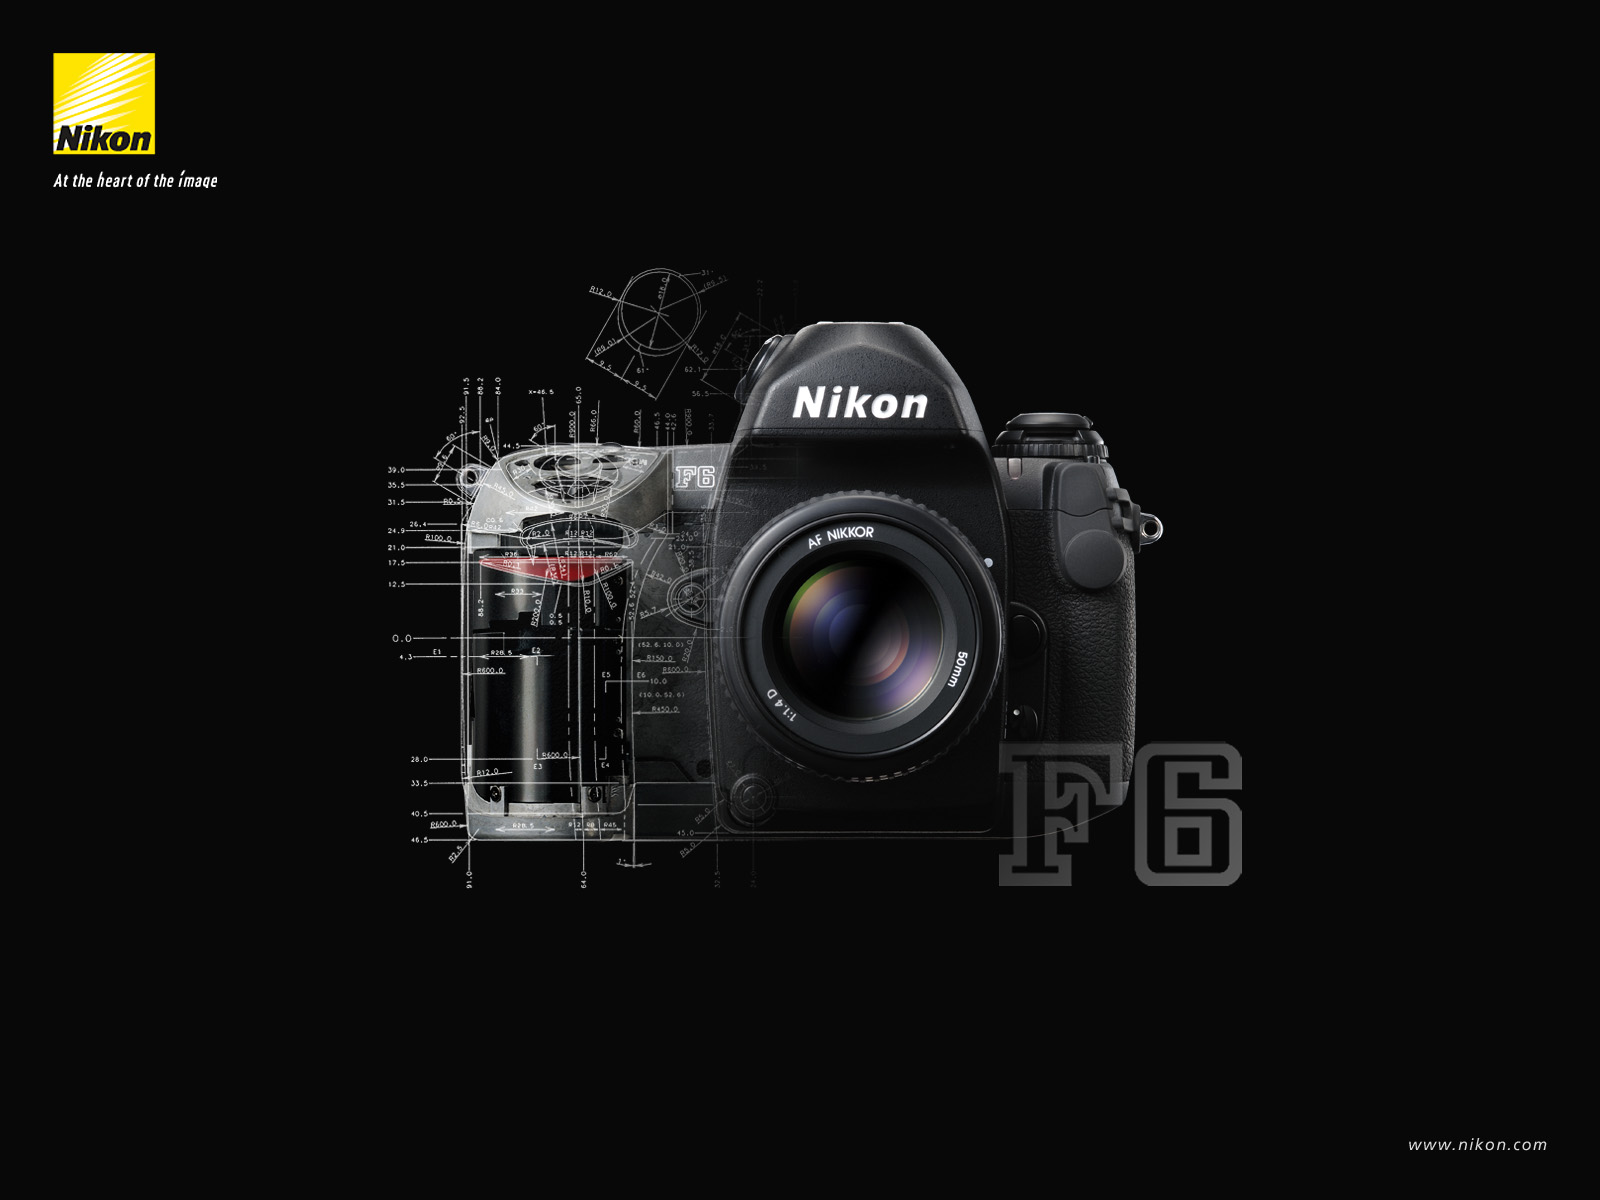 nikon wallpaper hd,cameras & optics,mirrorless interchangeable lens camera,camera,digital camera,reflex camera